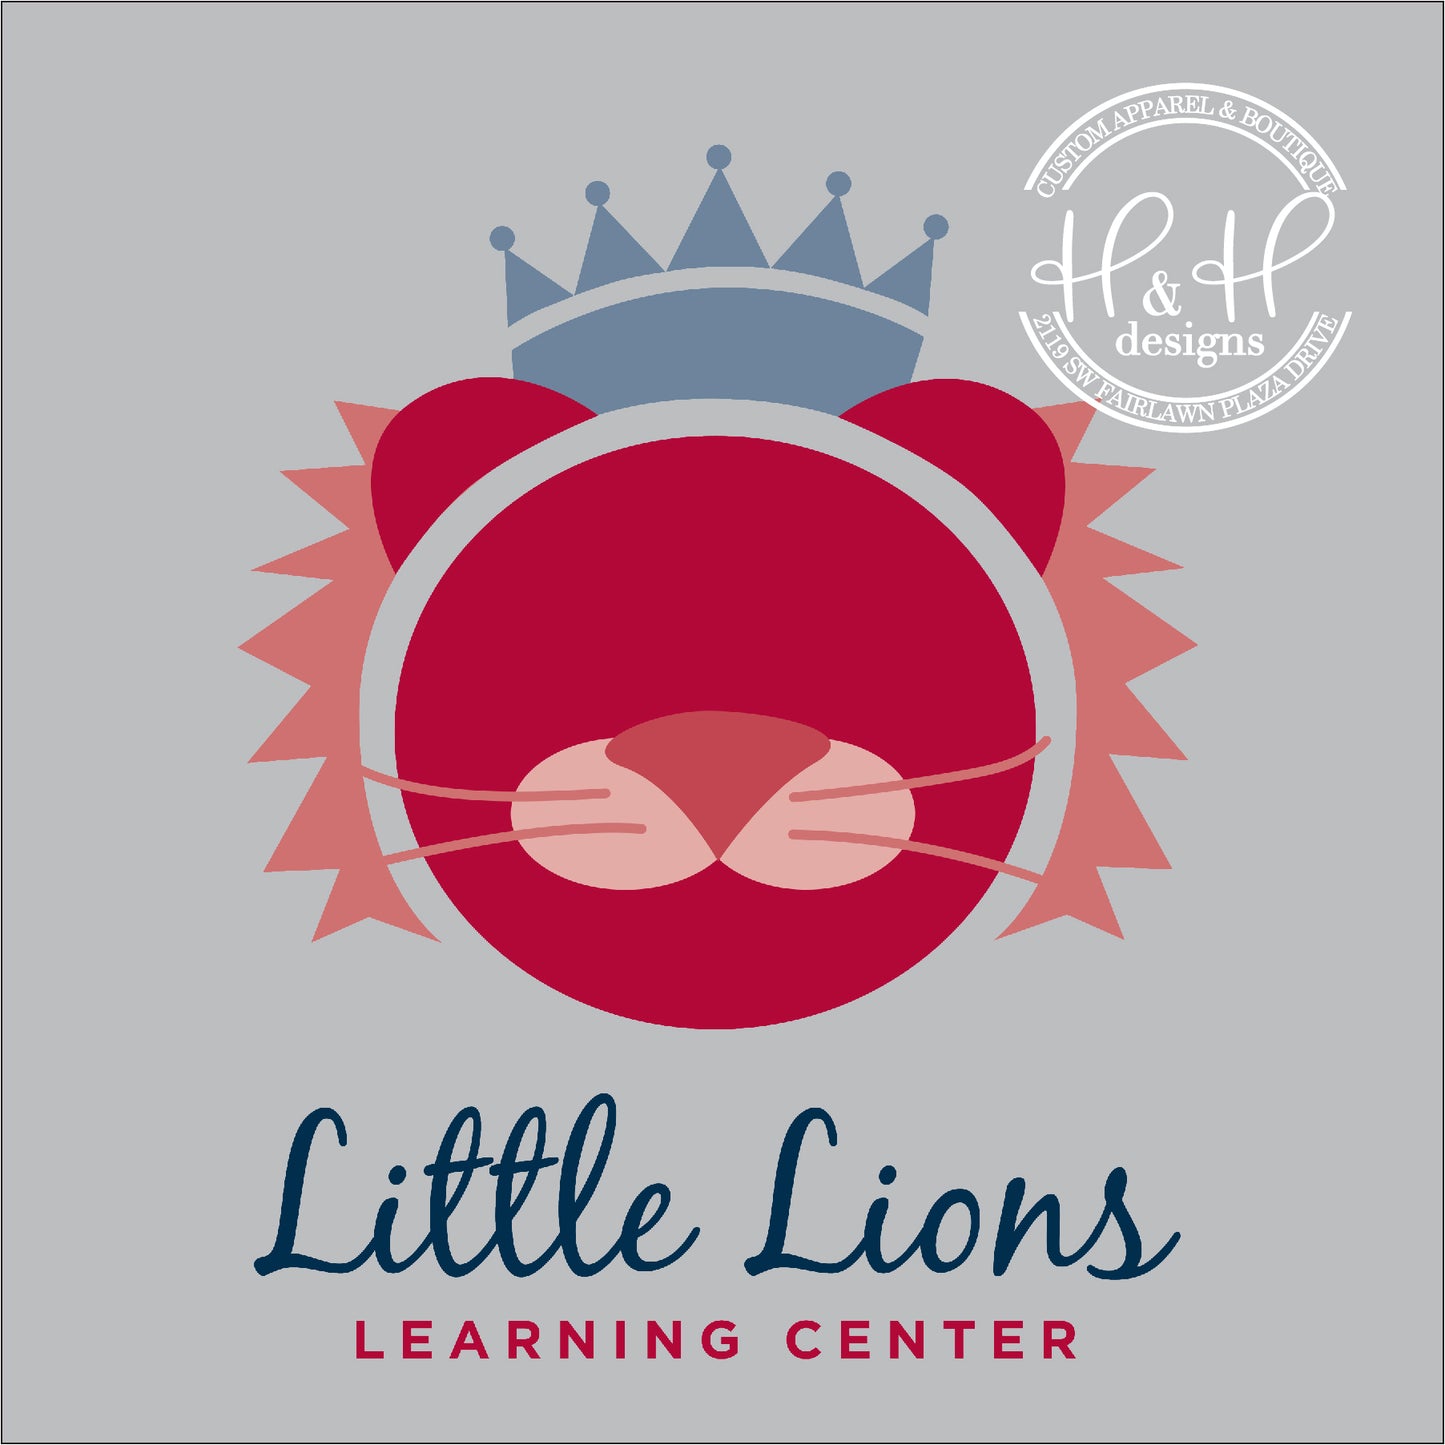 Little Lions Learning Center - CPLS Little Lions